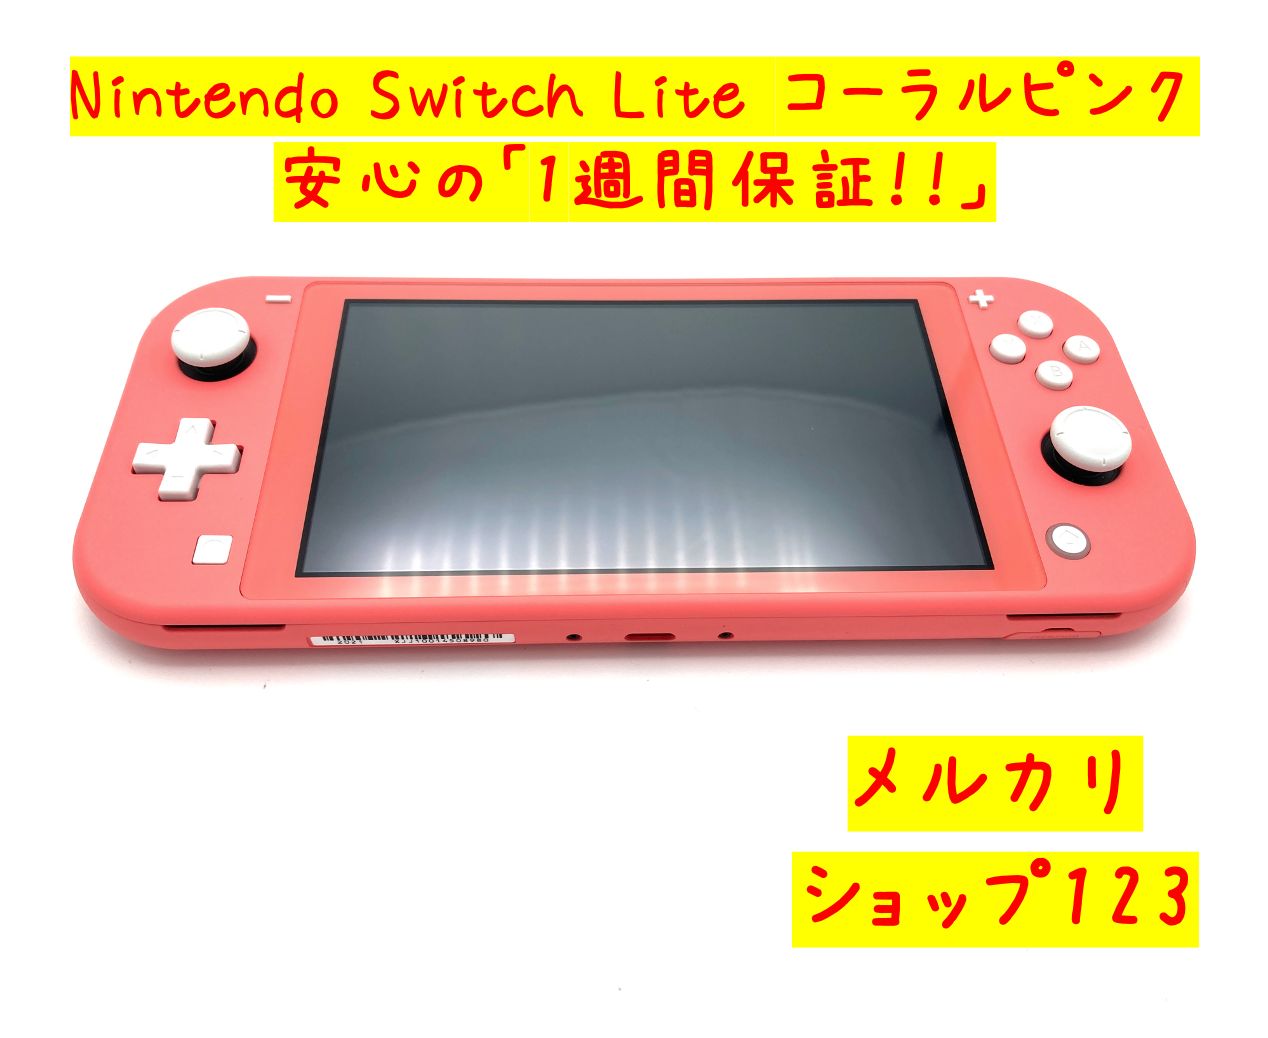 Nintendo Switch Lite コーラルピンク スイッチライト 本体のみ 